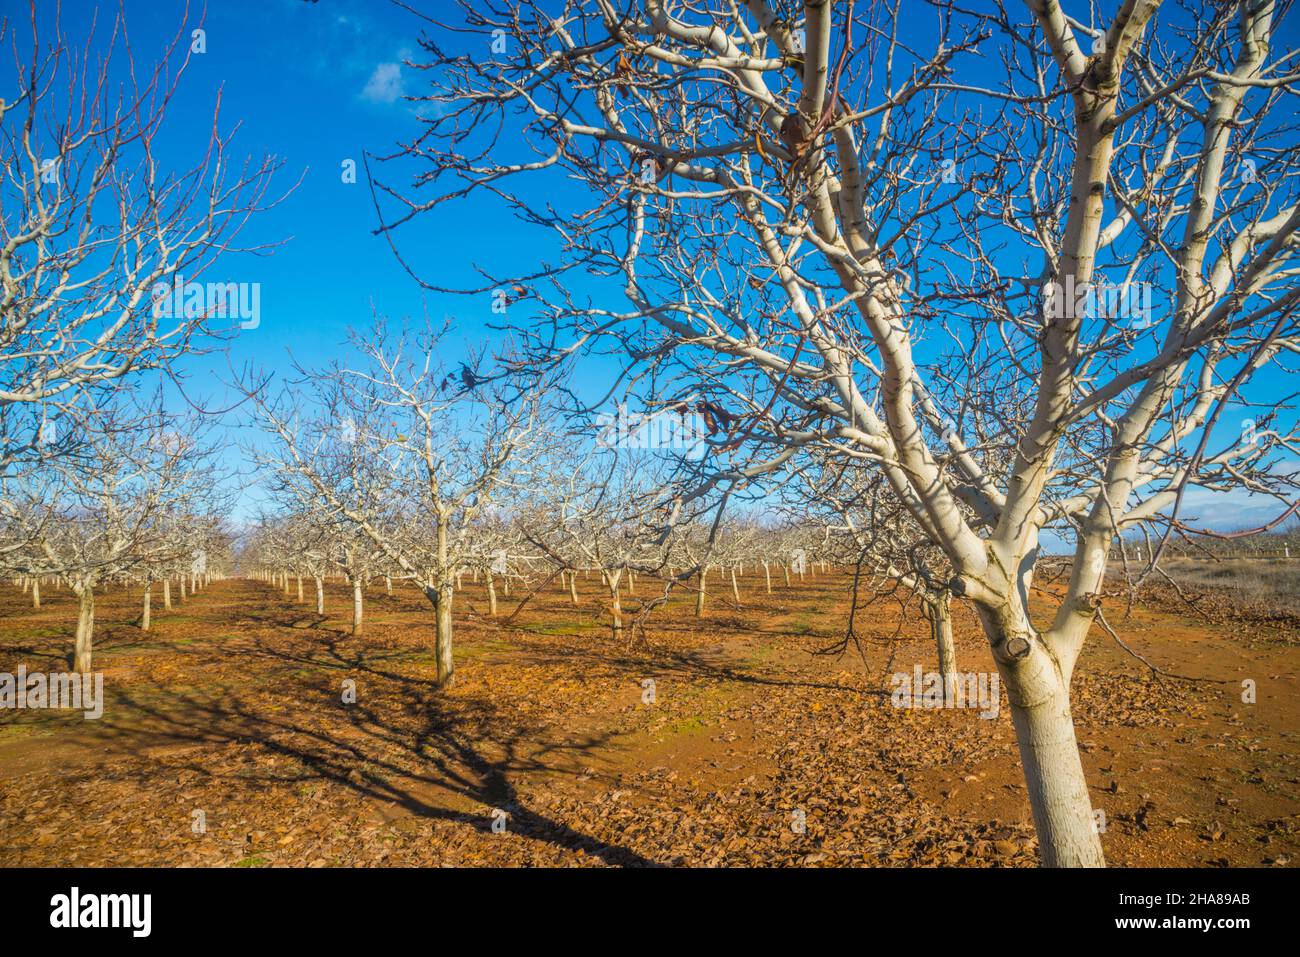 Pistachio trees. Campo de Criptana, Ciudad Real province, Castilla La Mancha, Spain. Stock Photo